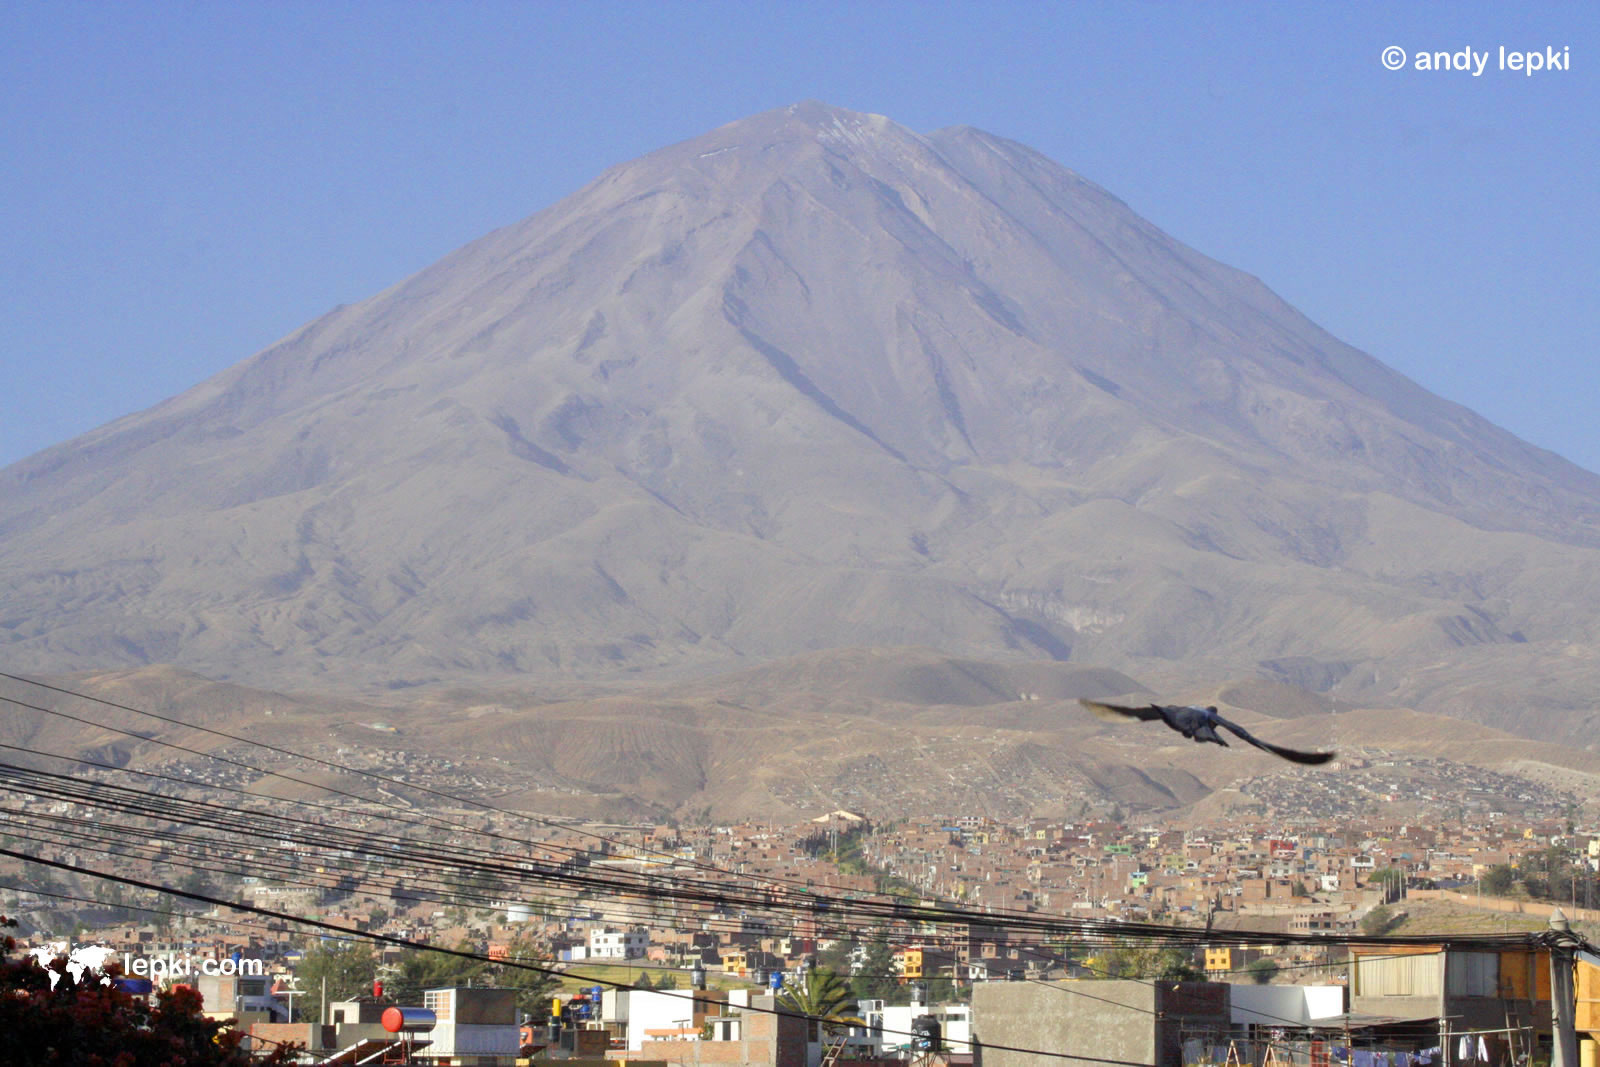 Arequipa, Peru - El Misti Volcano